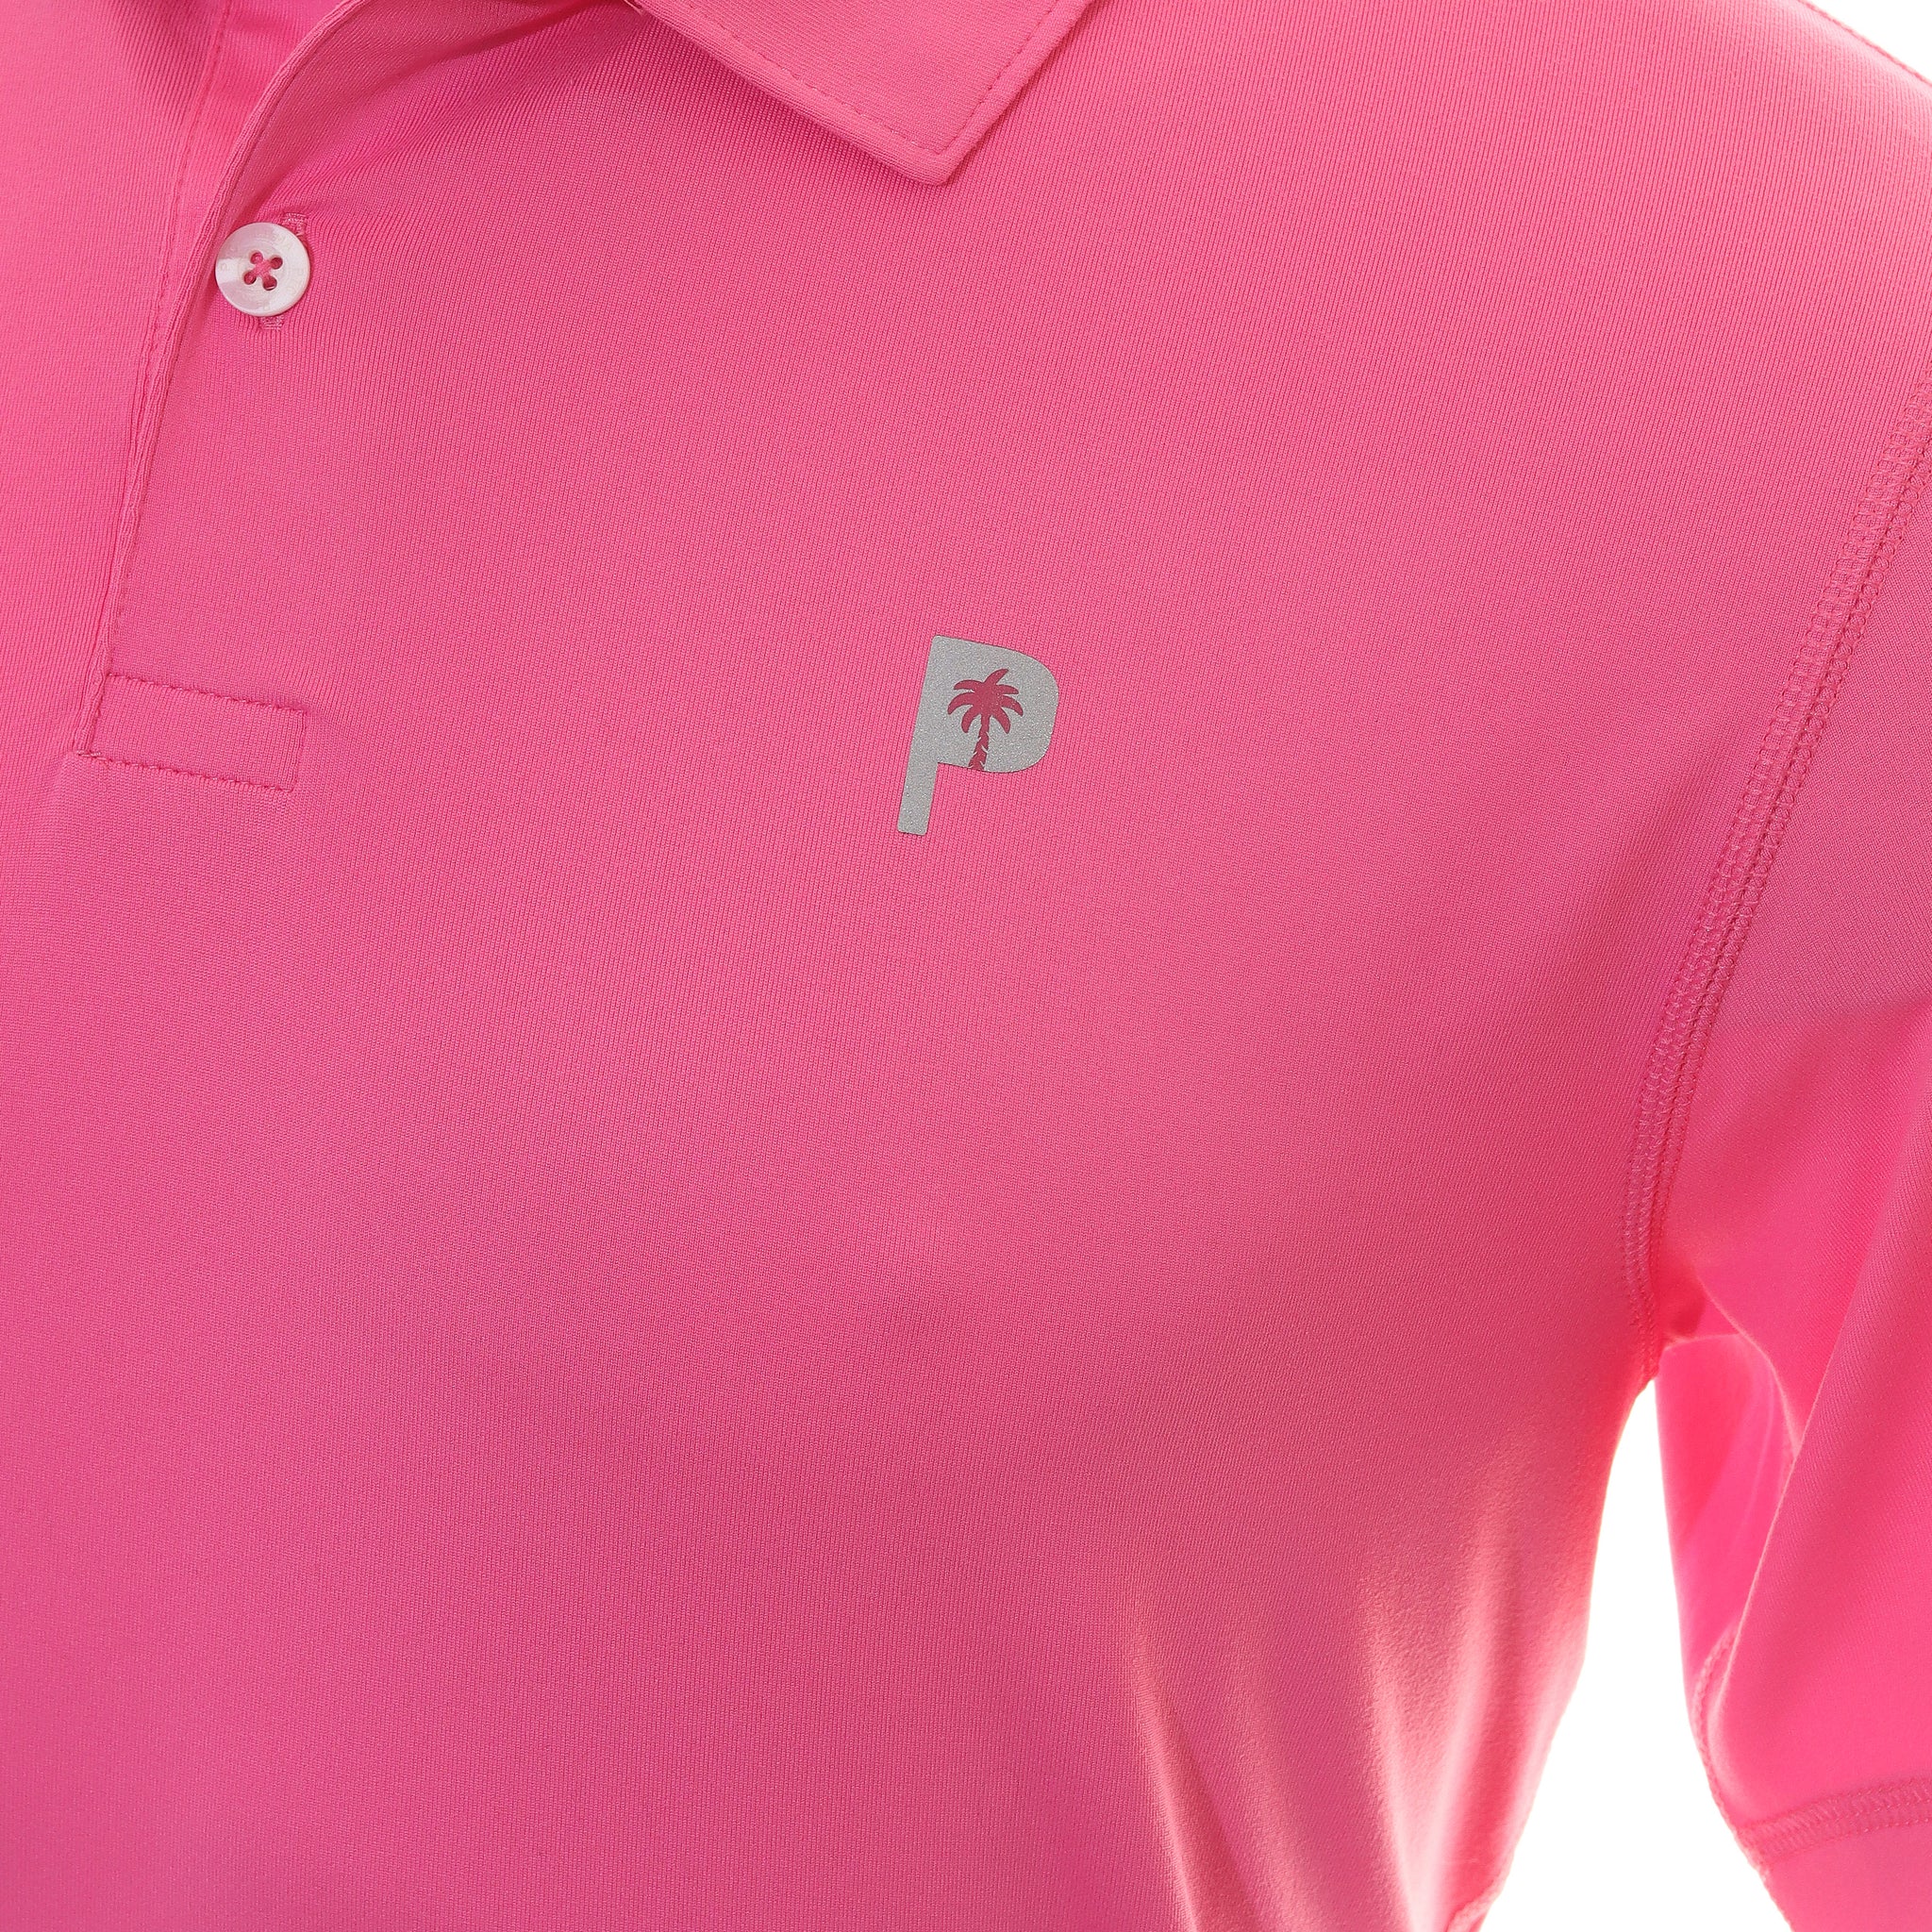 puma-golf-x-ptc-shirt-539201-charming-pink-04